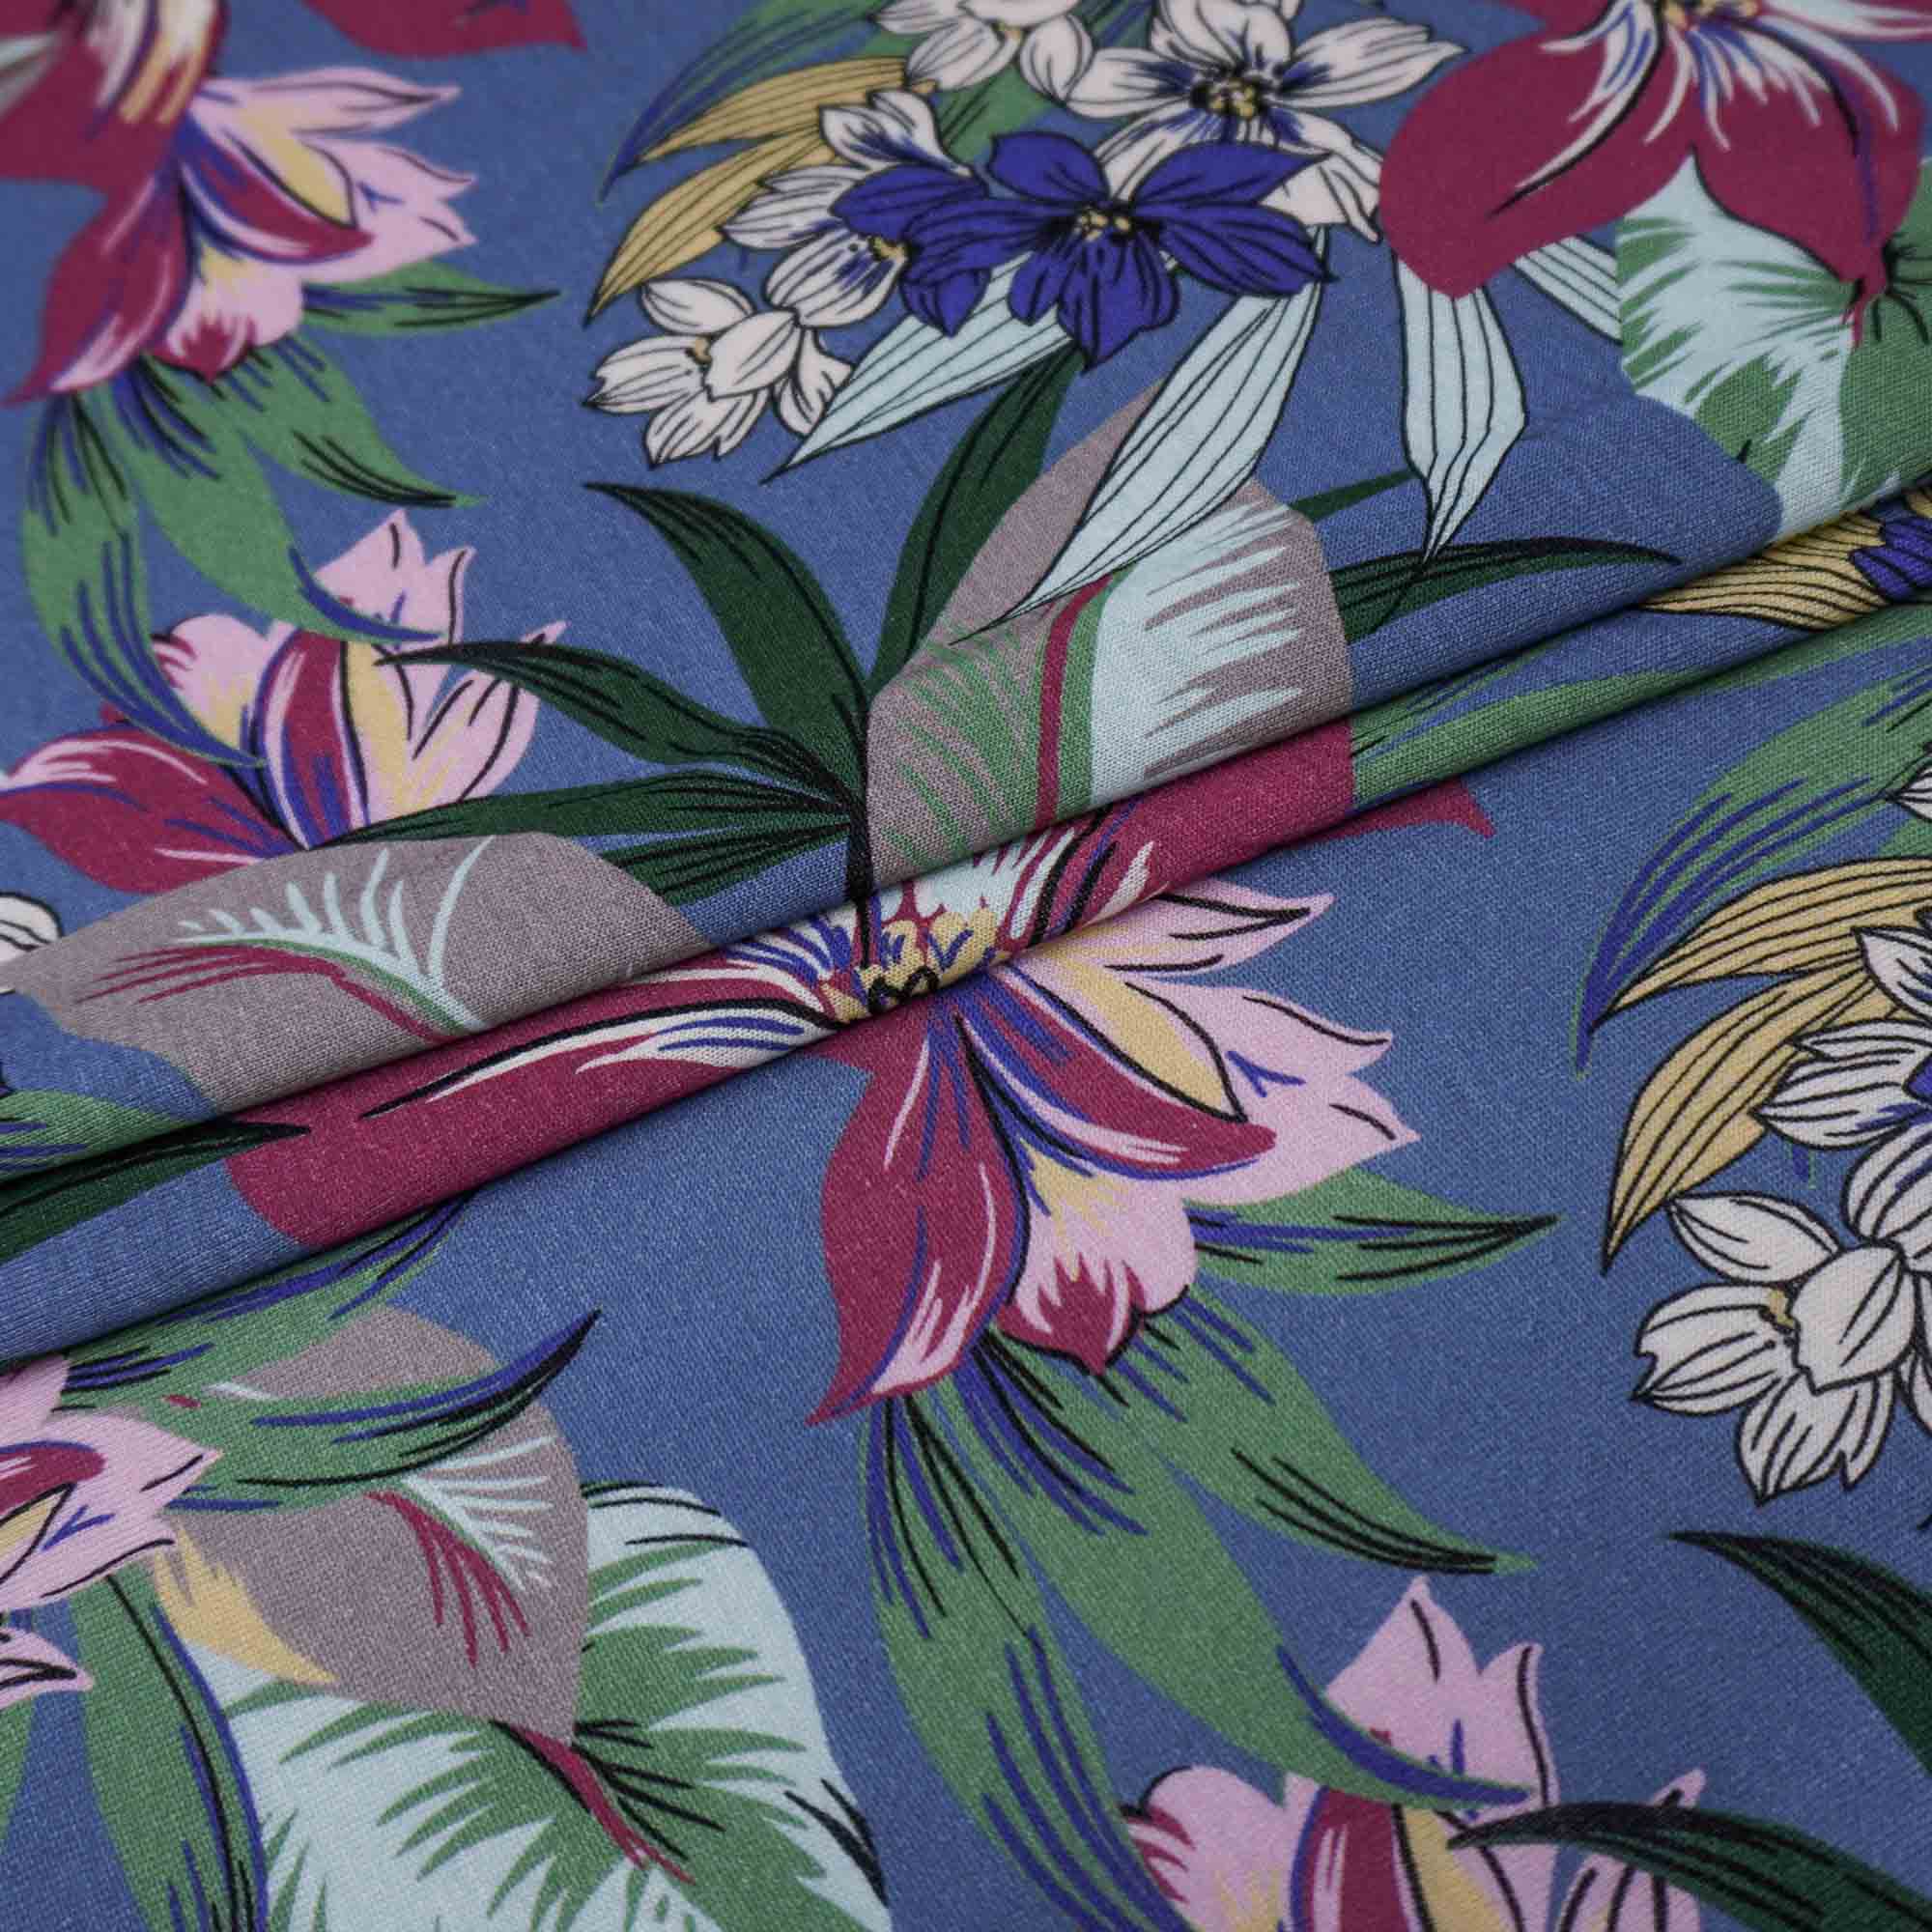 Tecido viscolycra azul jeans estampado floral (tecido italiano legítimo)